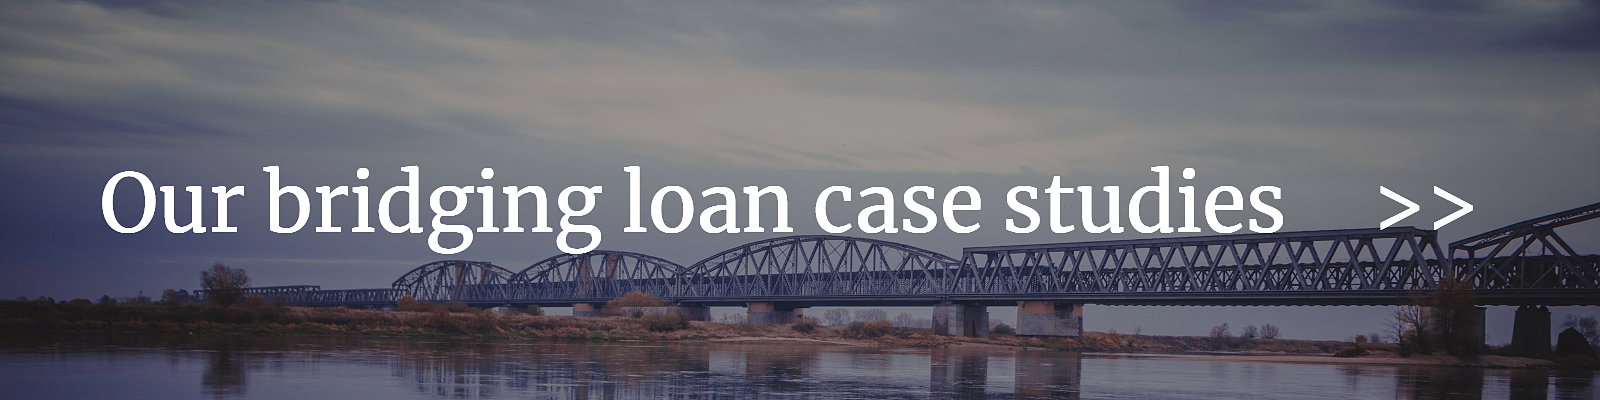 Our-bridging-loan-case-studies